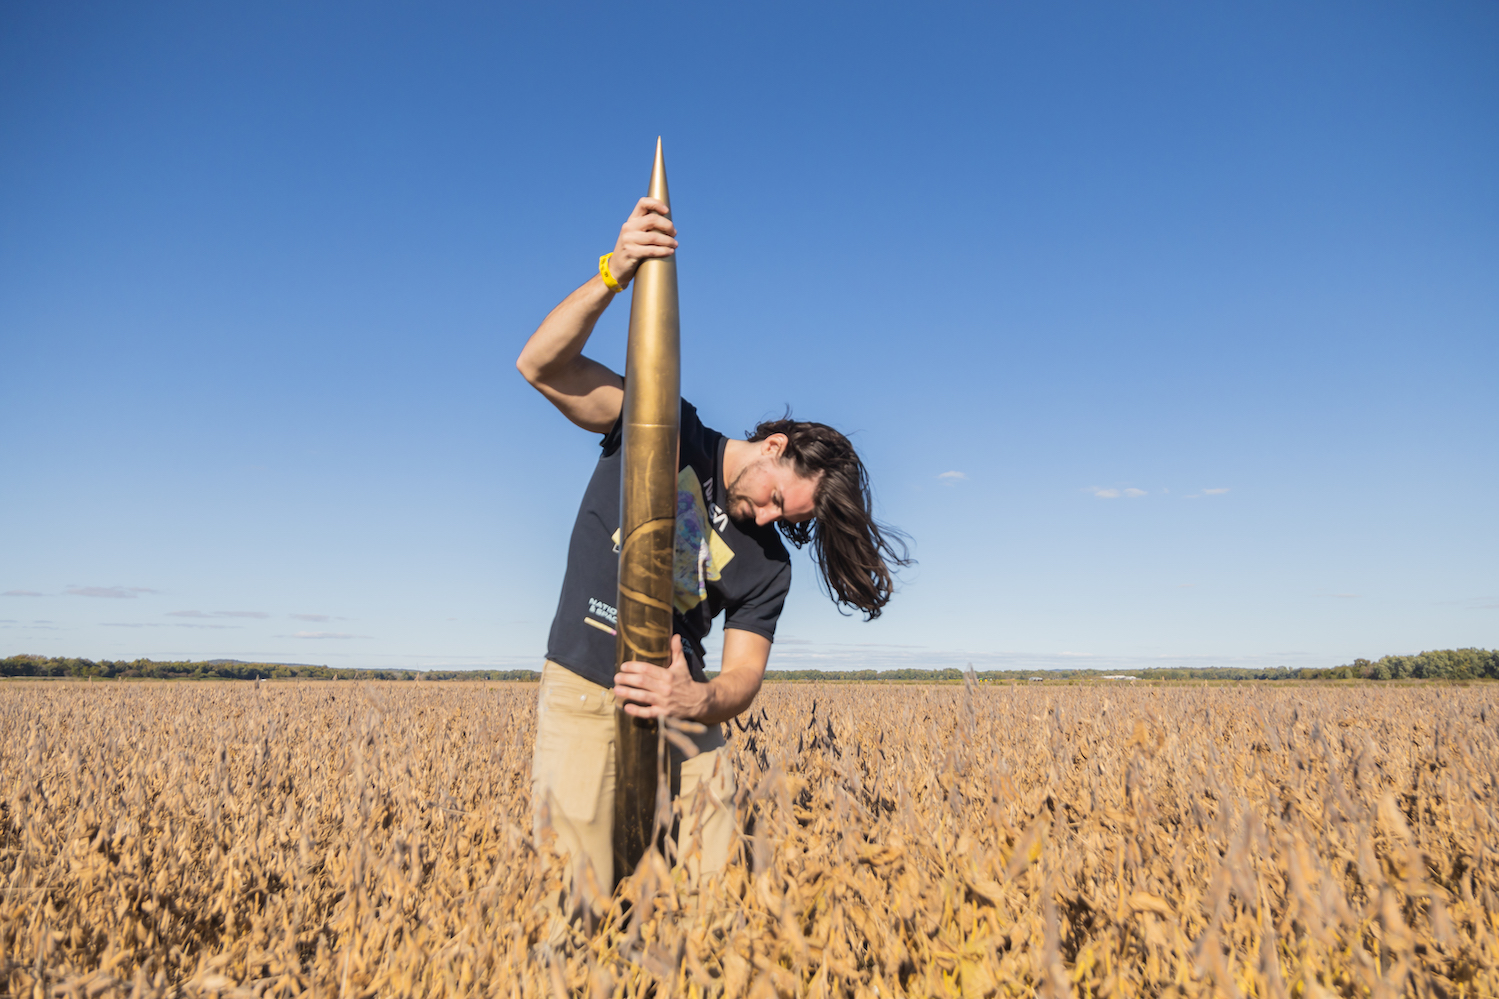 Alex Miller re-assembles his rocket after flight in a wheat field.